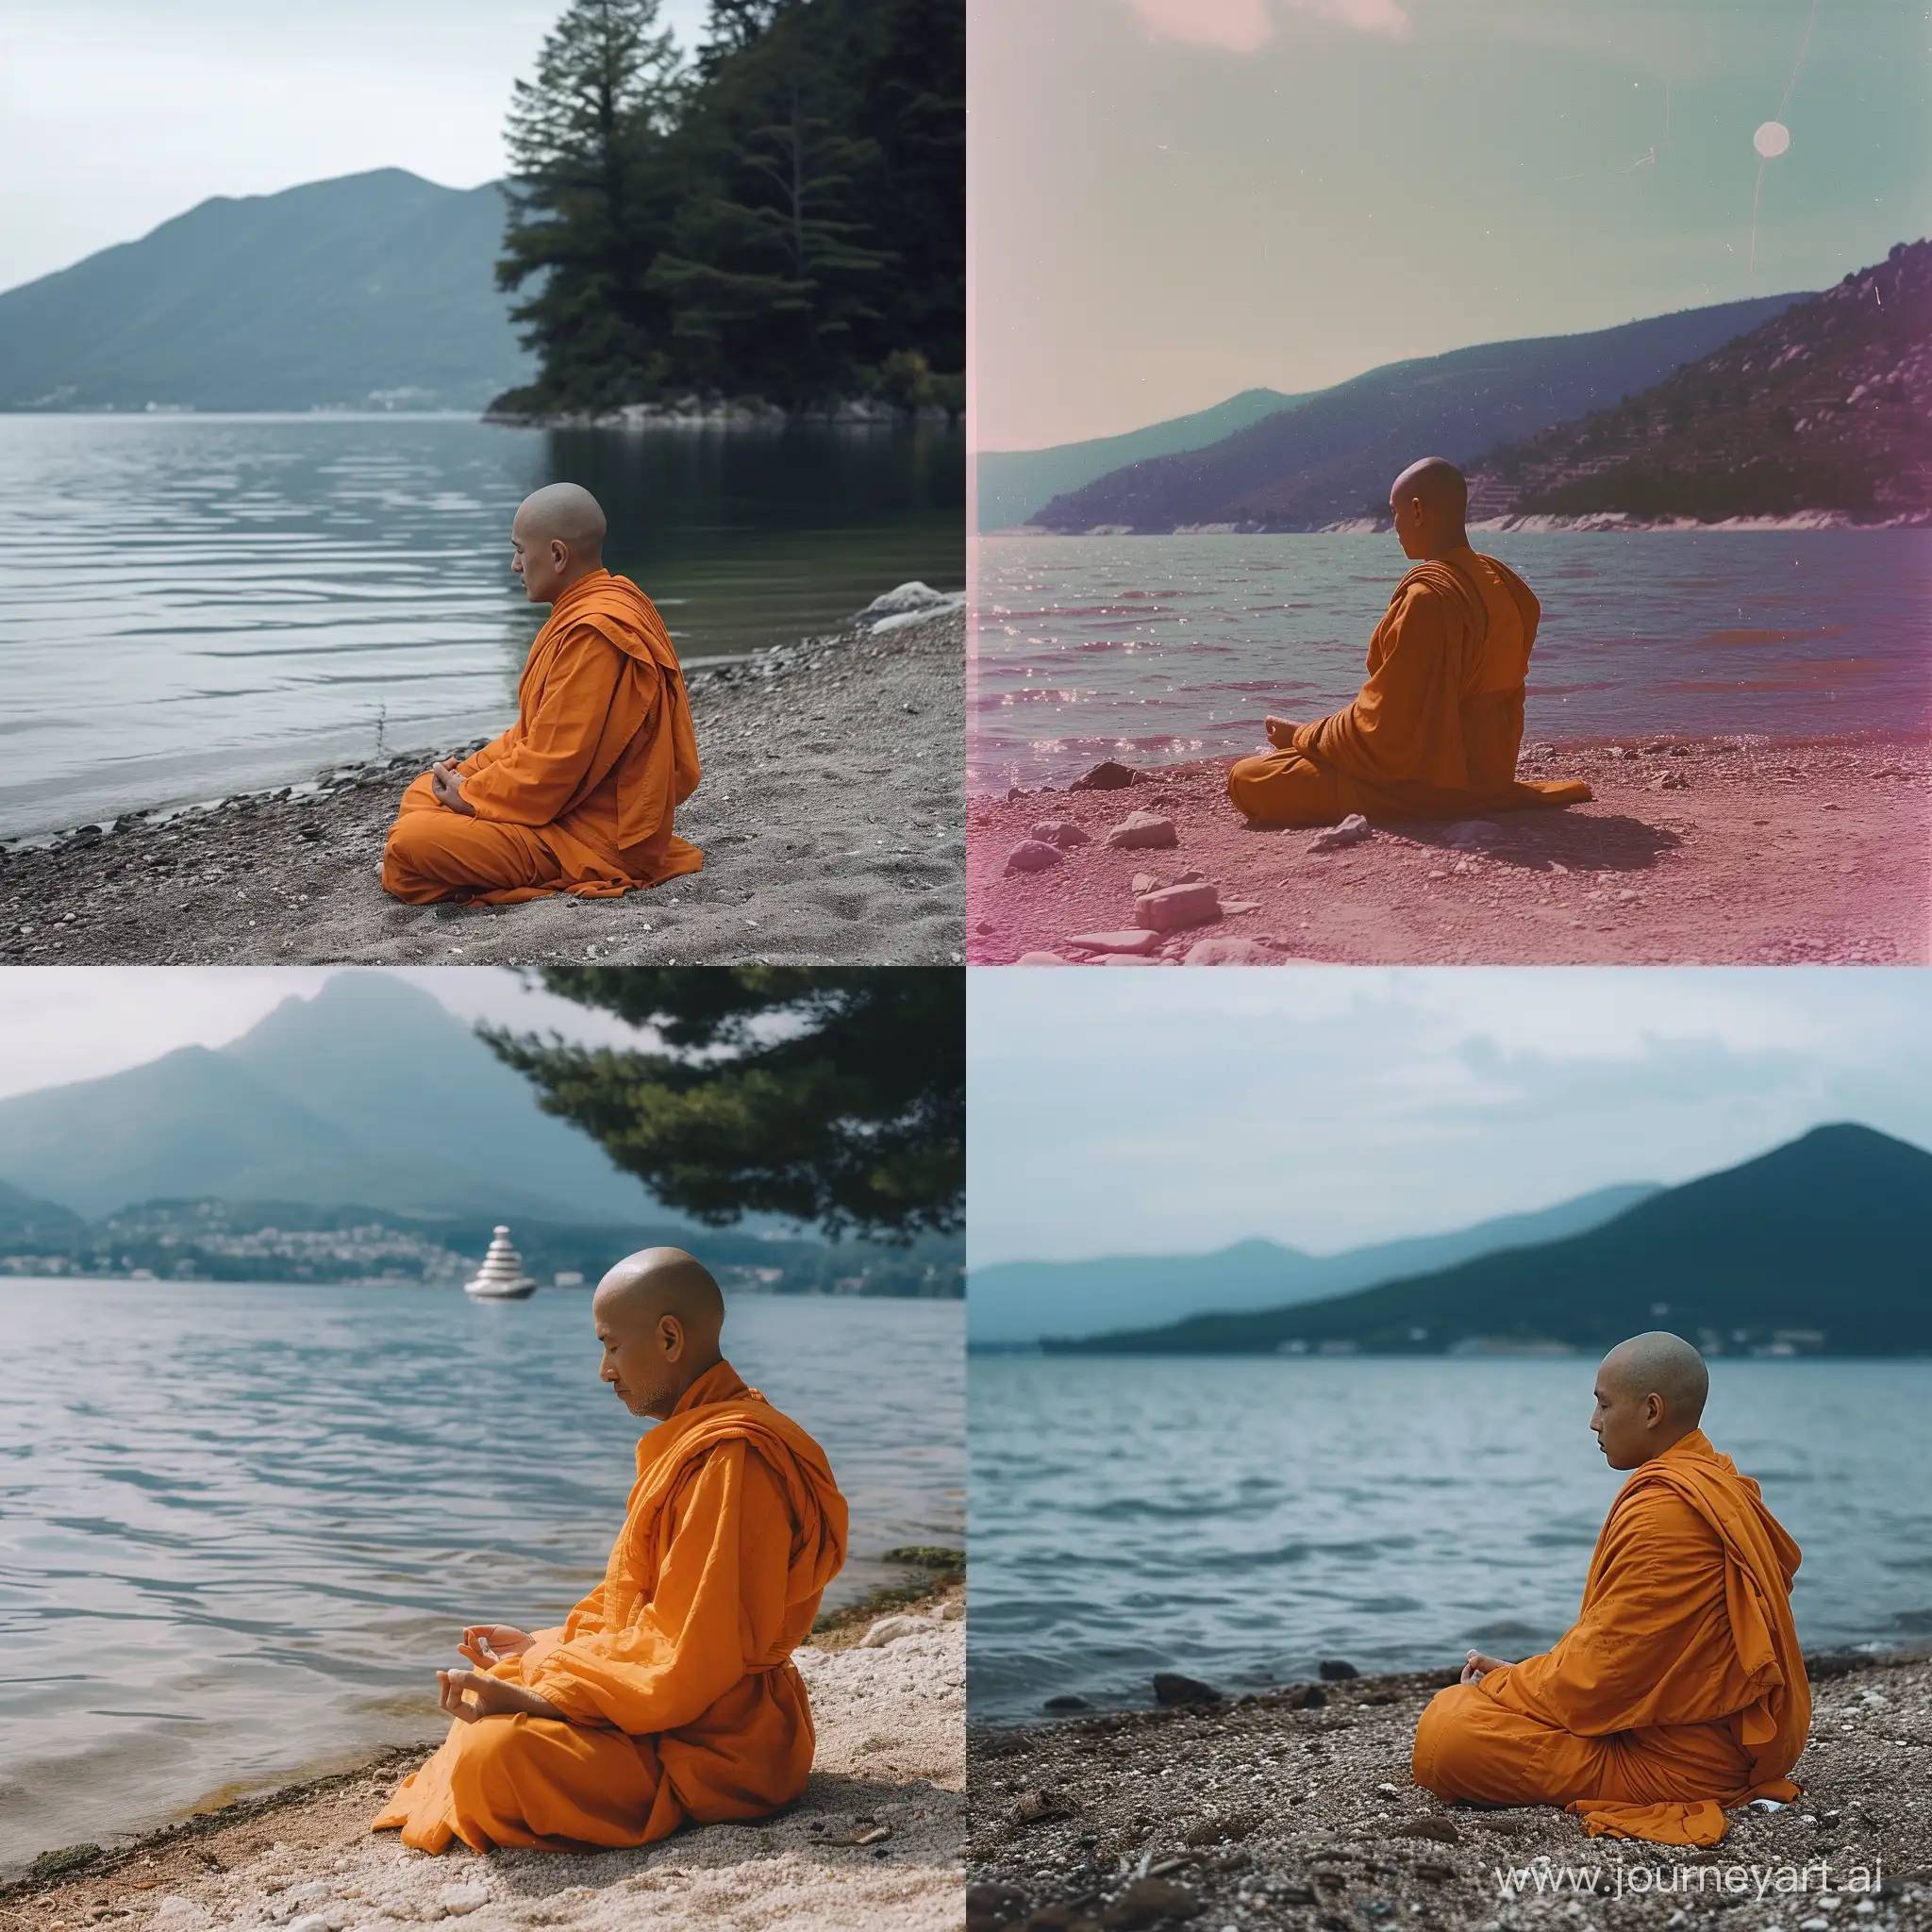 buddhist monk meditating on the shore of a lake vaporwave aesthetics